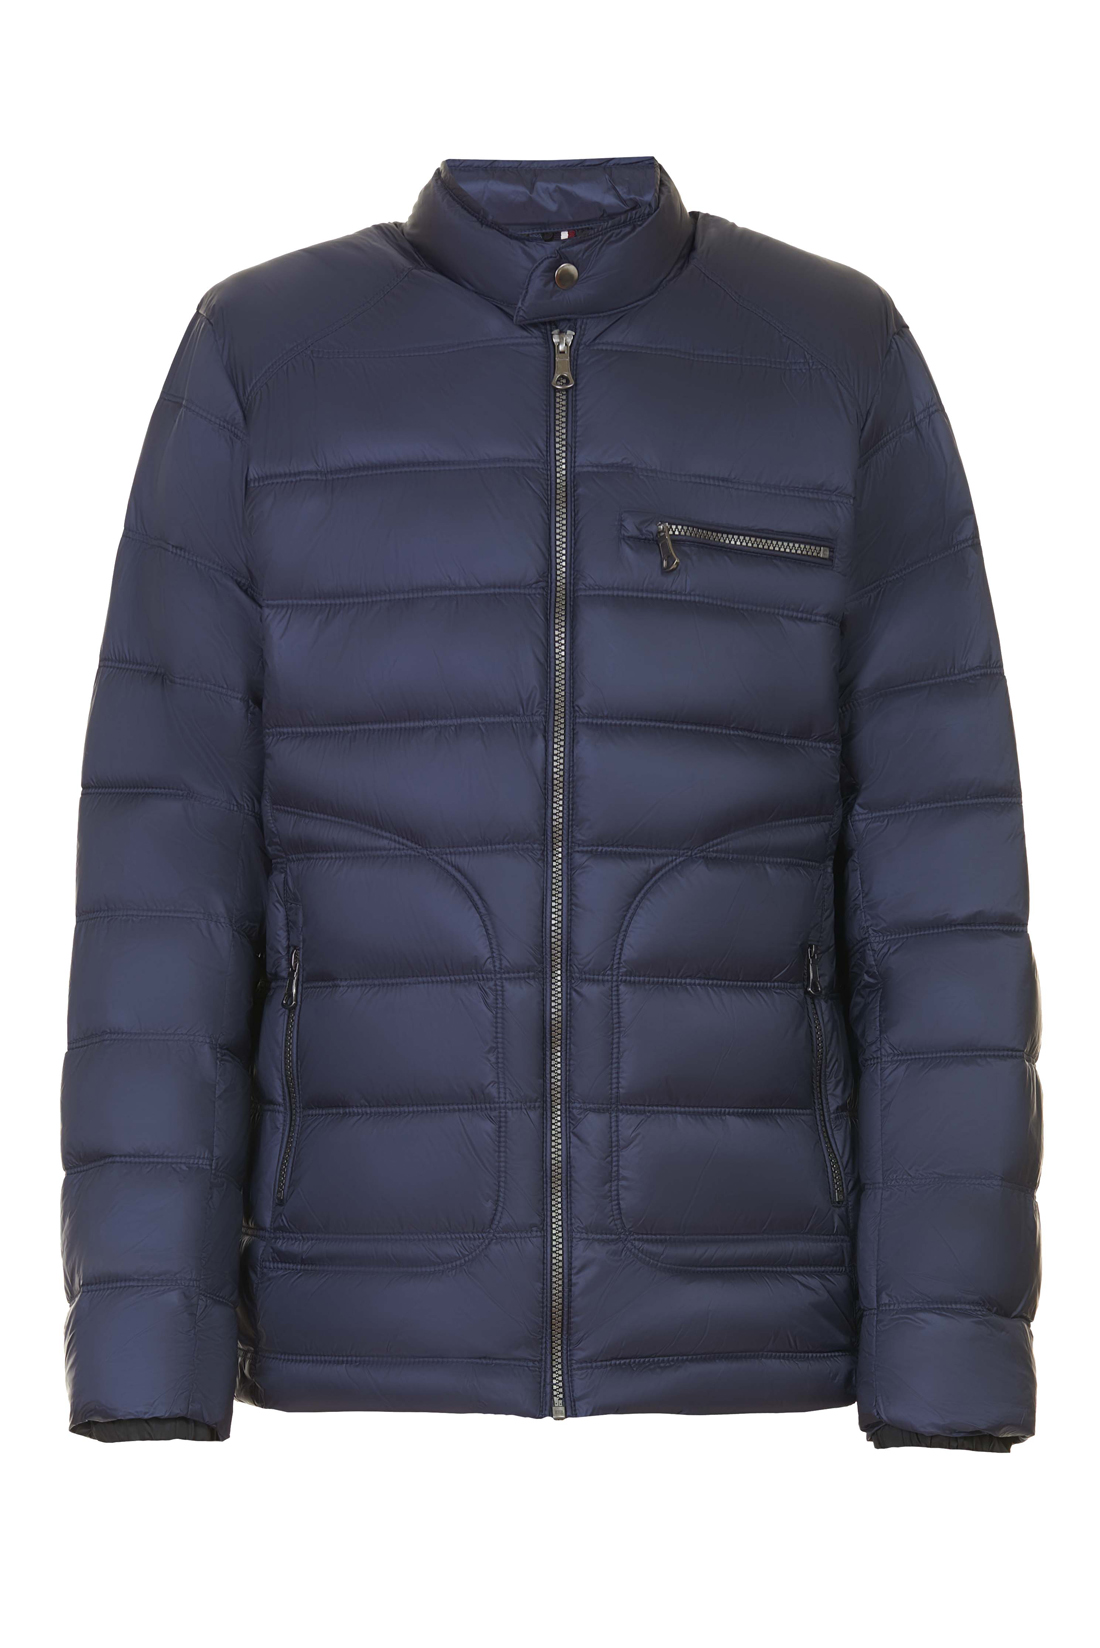 Куртка с прострочкой (арт. baon B537560), размер XL, цвет синий Куртка с прострочкой (арт. baon B537560) - фото 3